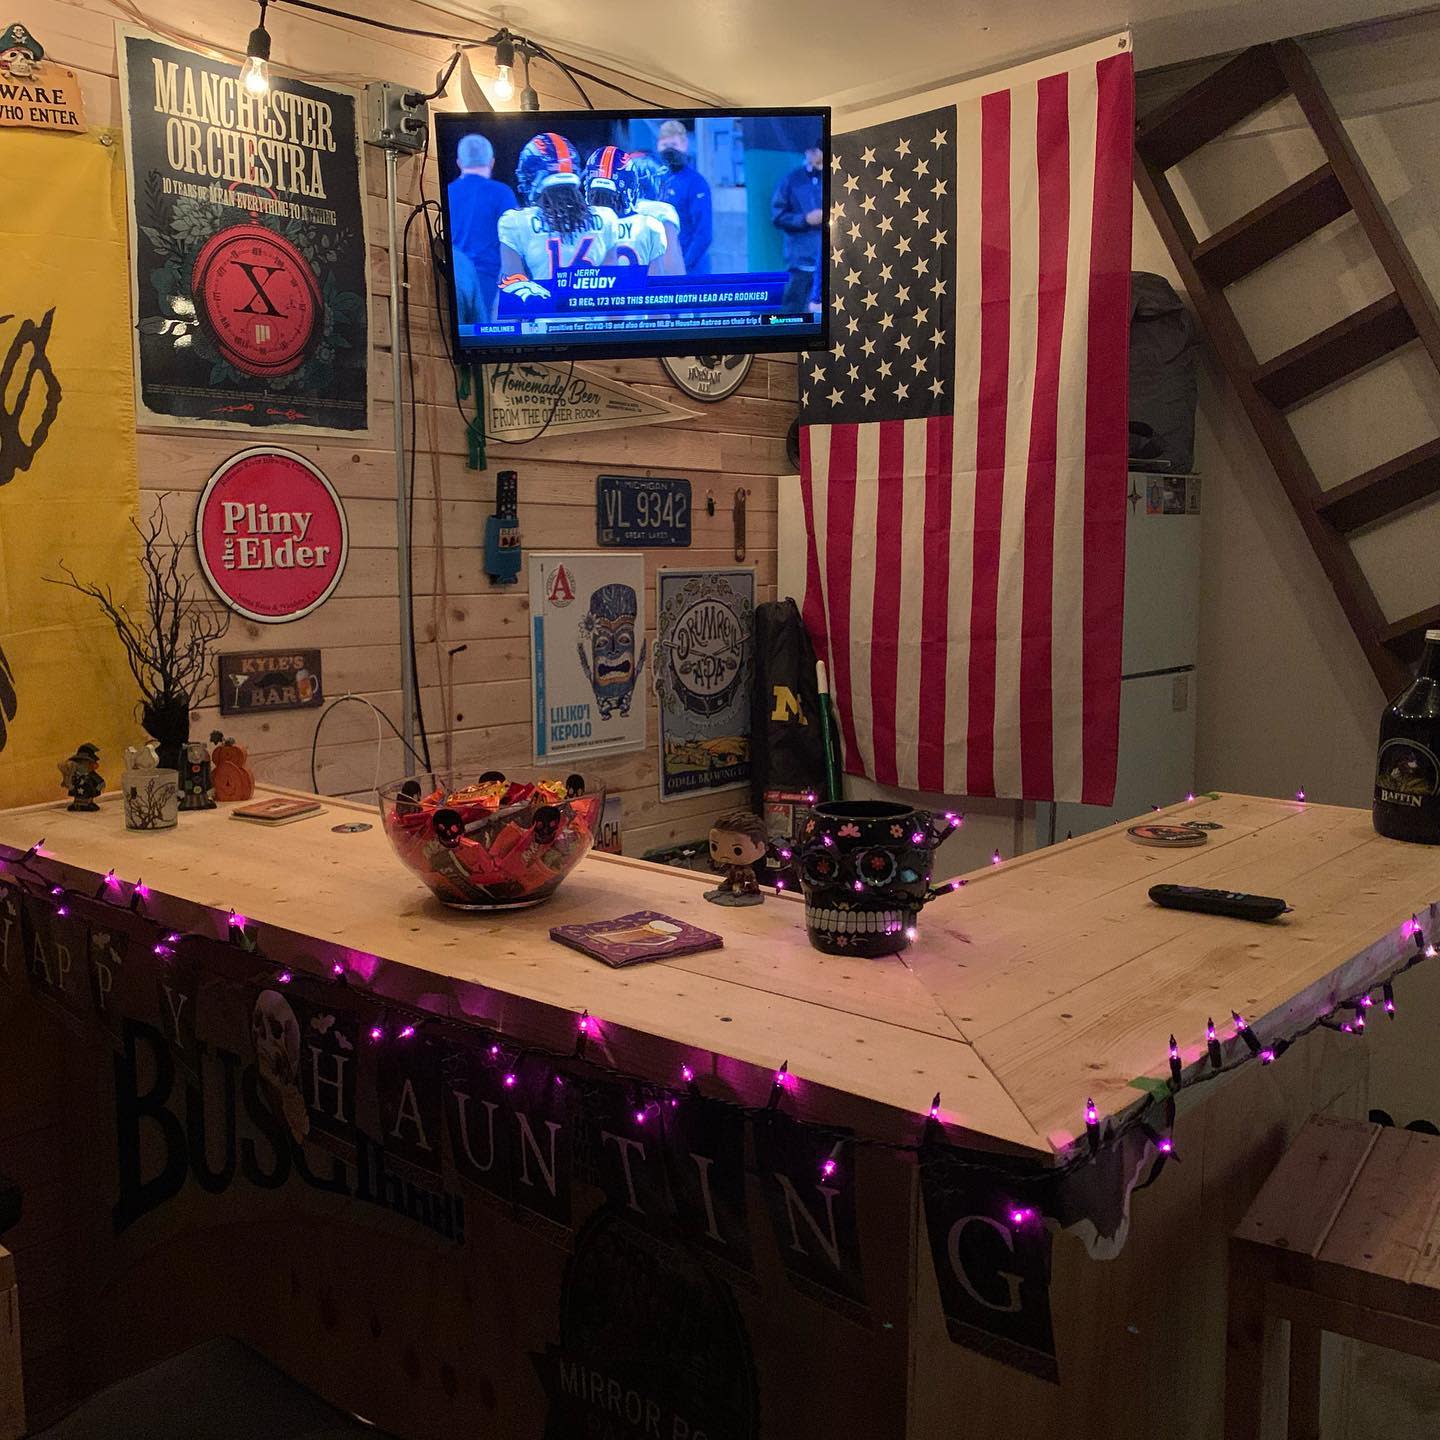 Shiplap walls, wooden bar, garage, American flag, wall mounted TV string lights